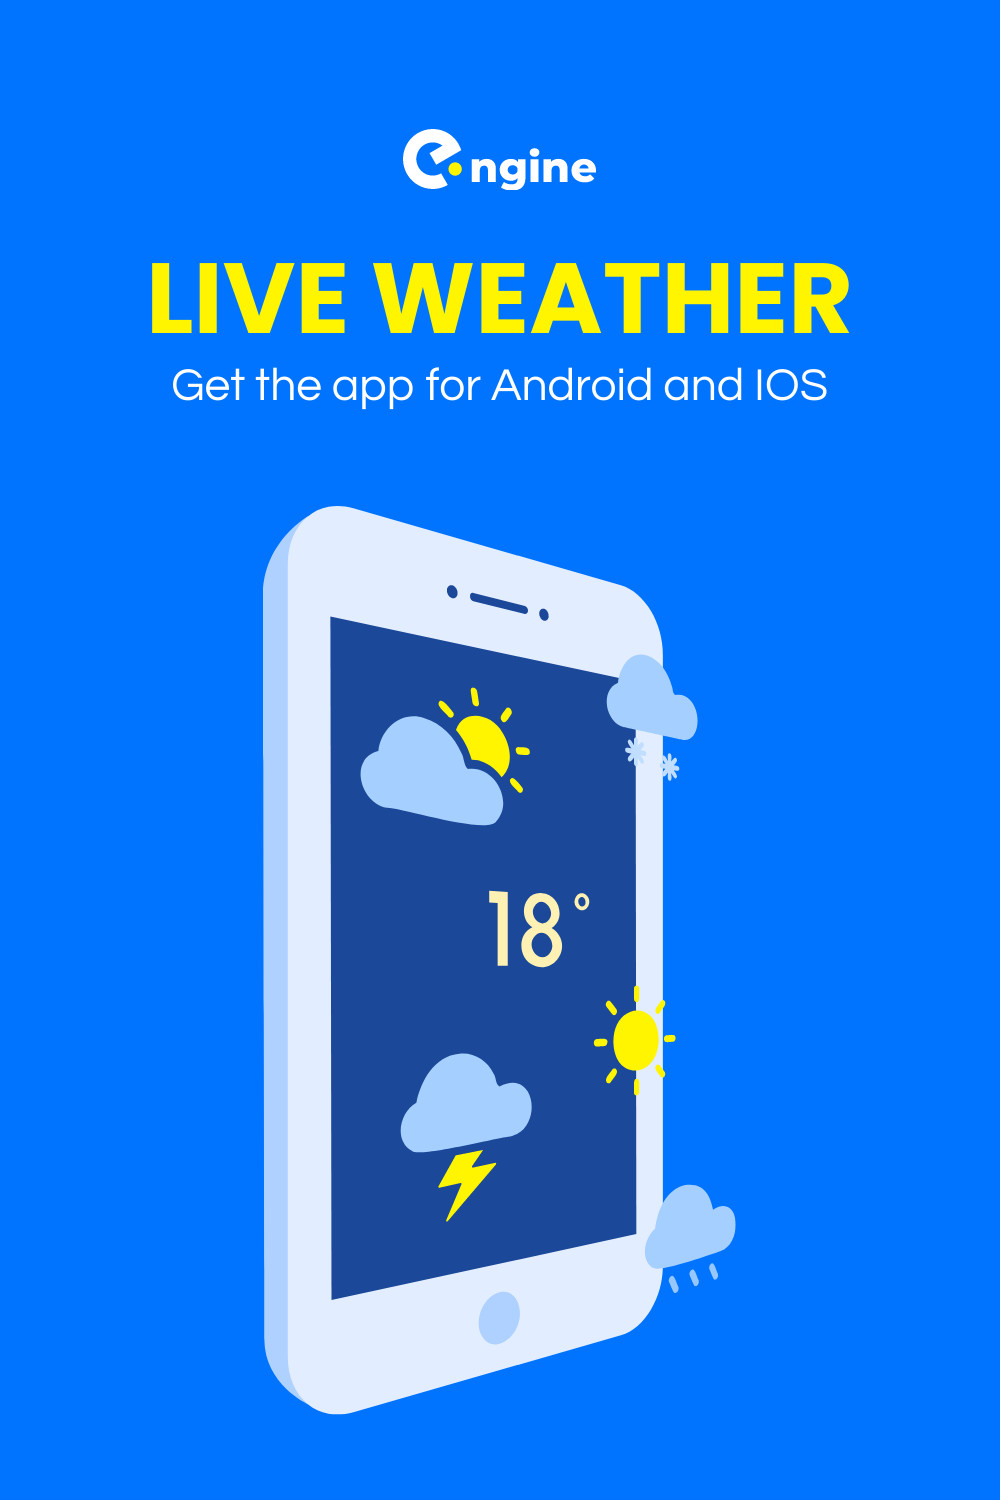 Live Weather App